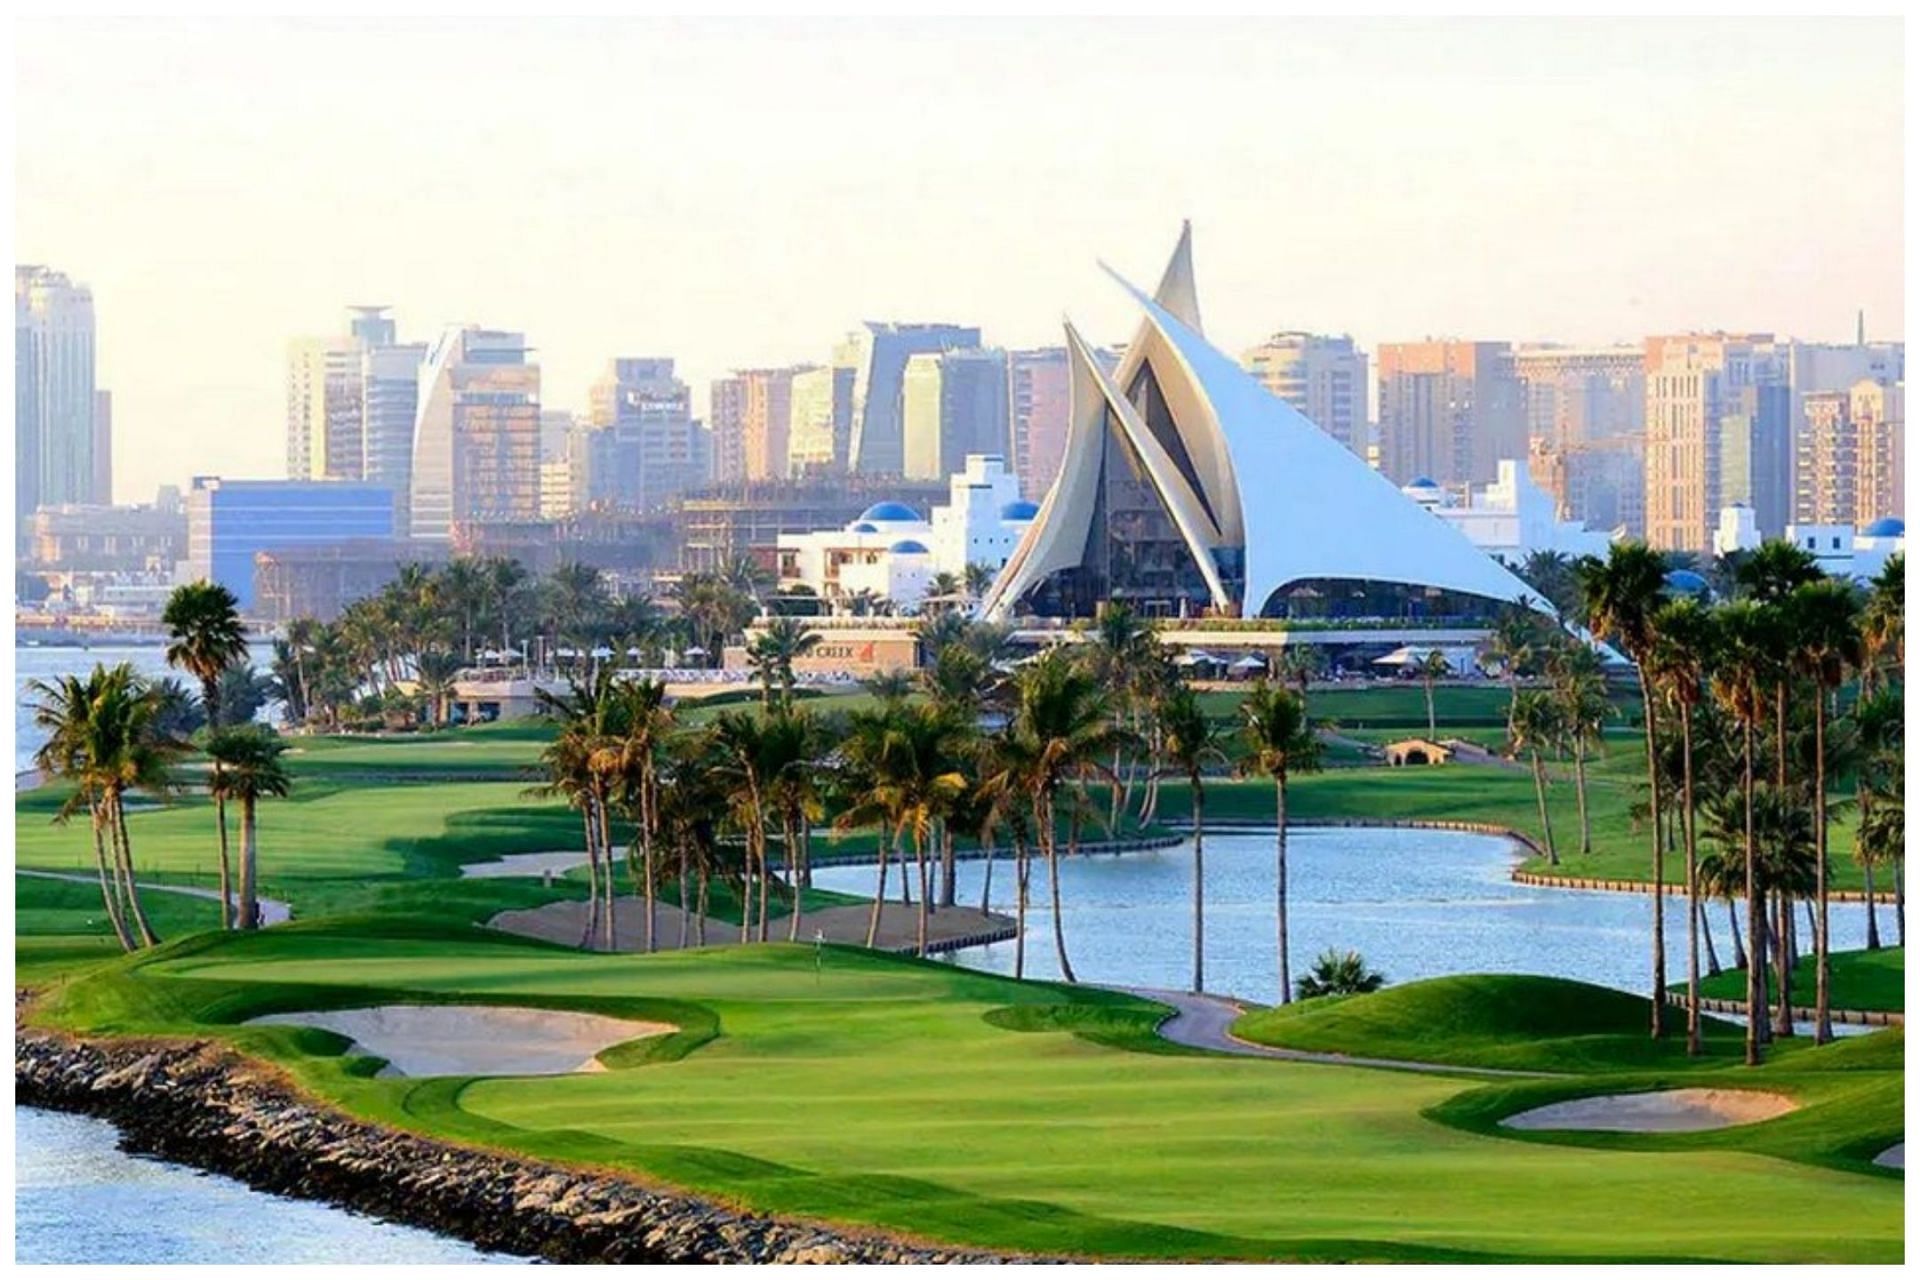 The Dubai Invitational will take place at the Dubai Creek Resort